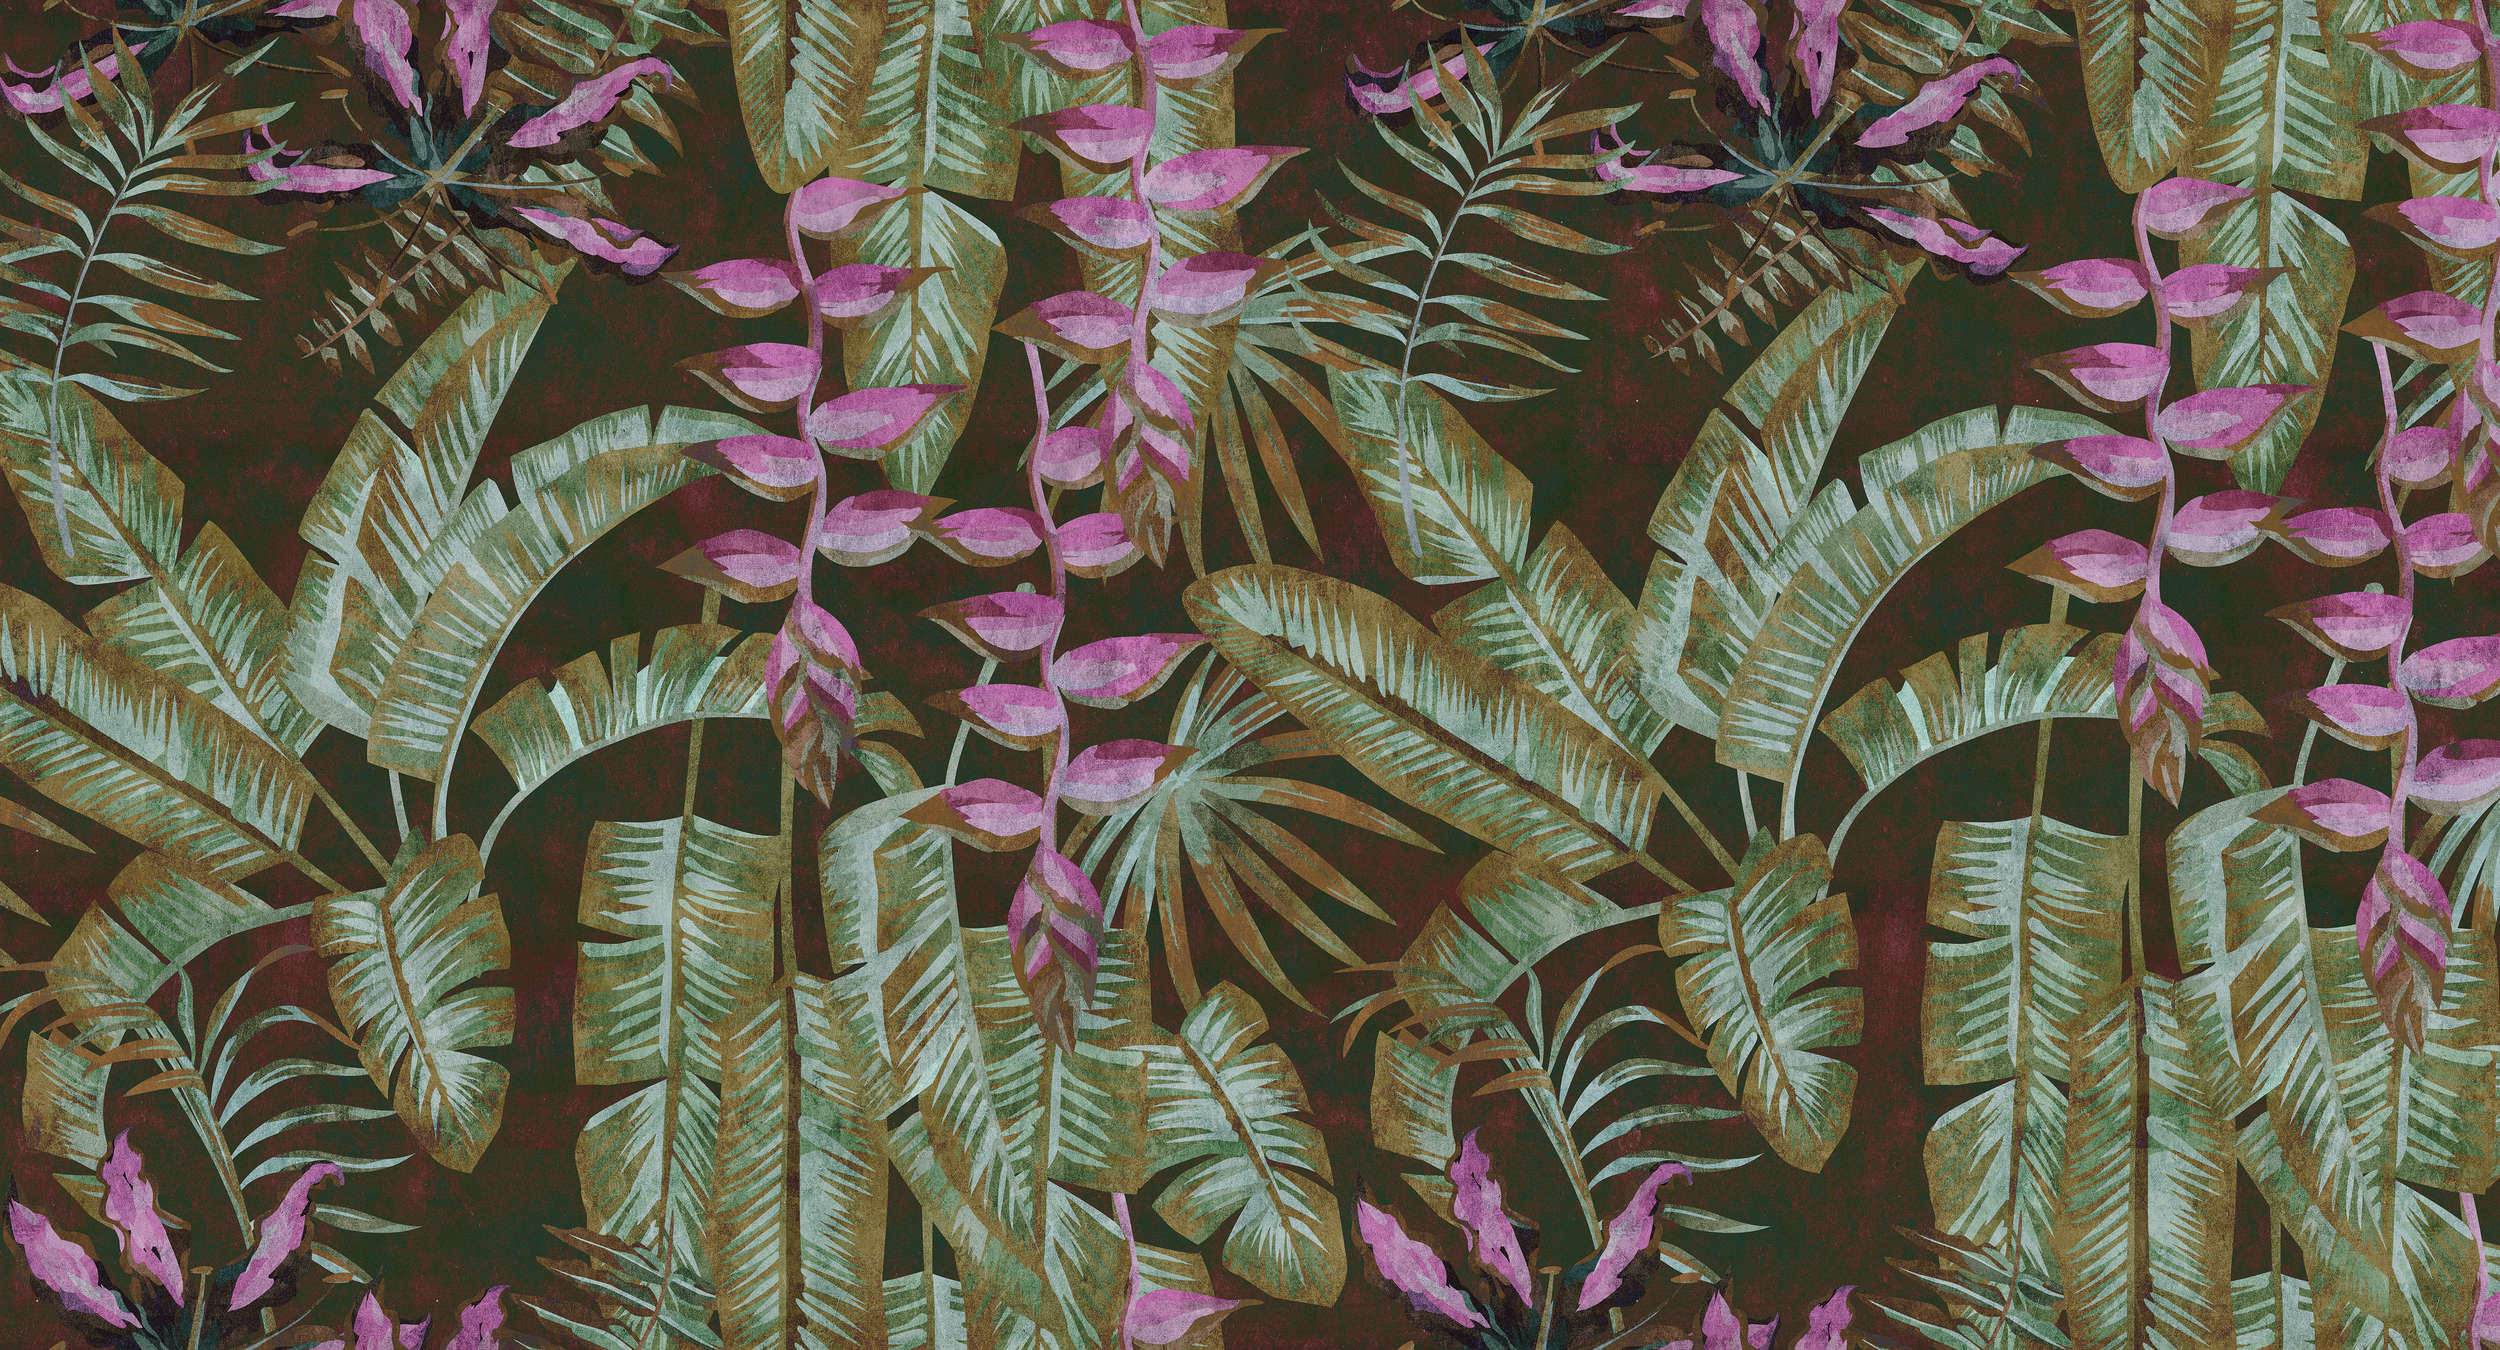             Tropicana 1 - Jungle Wallpaper with Banana Leaves&Farms Blotting Paper Structure - Green, Purple | Matt Smooth Non-woven
        